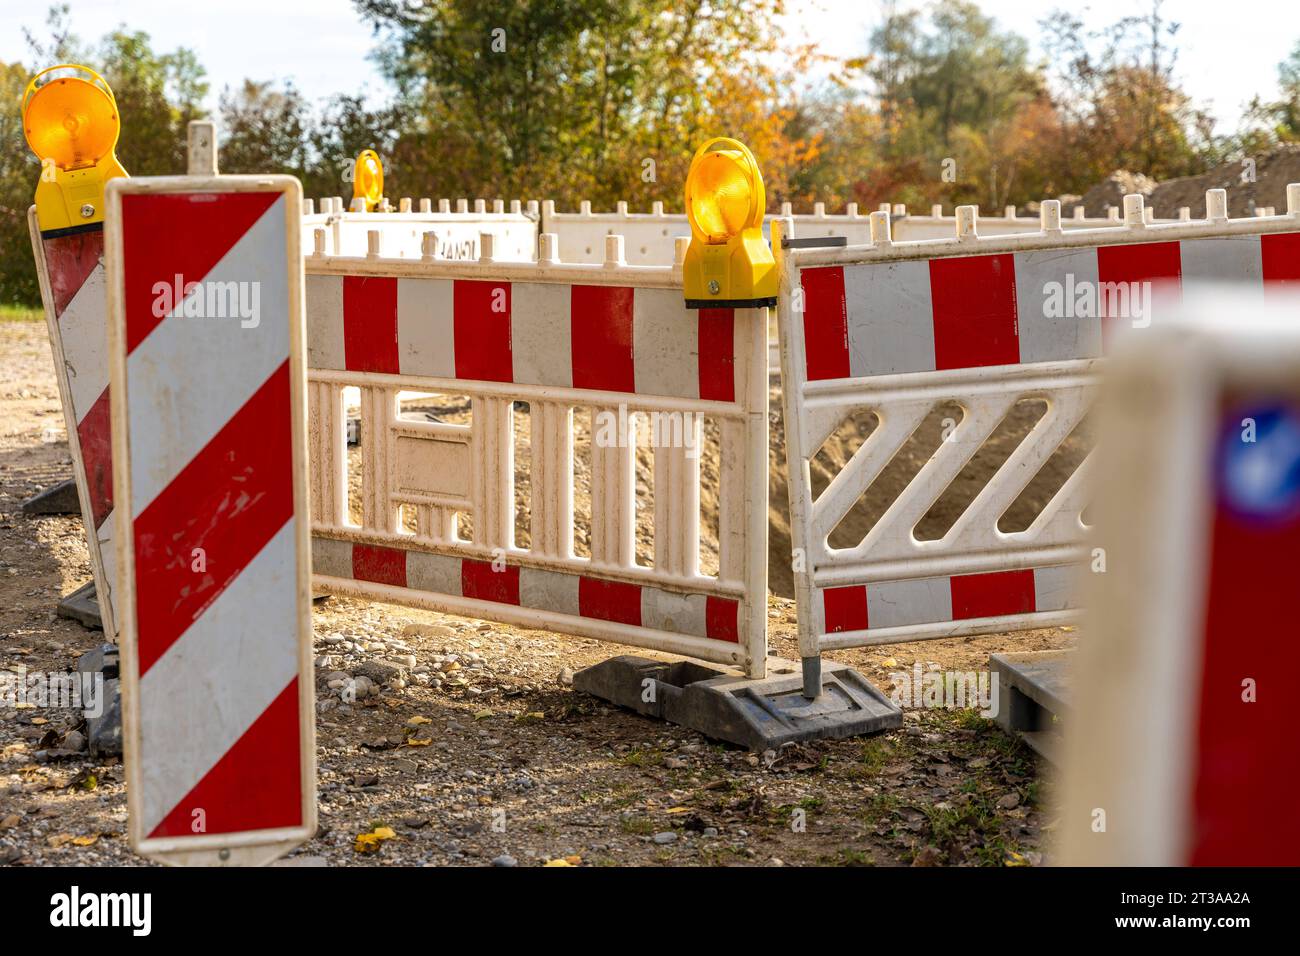 https://c8.alamy.com/comp/2T3AA2A/langweid-bavaria-germany-23rd-oct-2023-construction-site-cordoning-off-construction-site-barrier-with-yellow-warning-lights-absperrung-der-baustelle-baustellen-absperrung-mit-gelben-warnlichtern-credit-imagoalamy-live-news-2T3AA2A.jpg